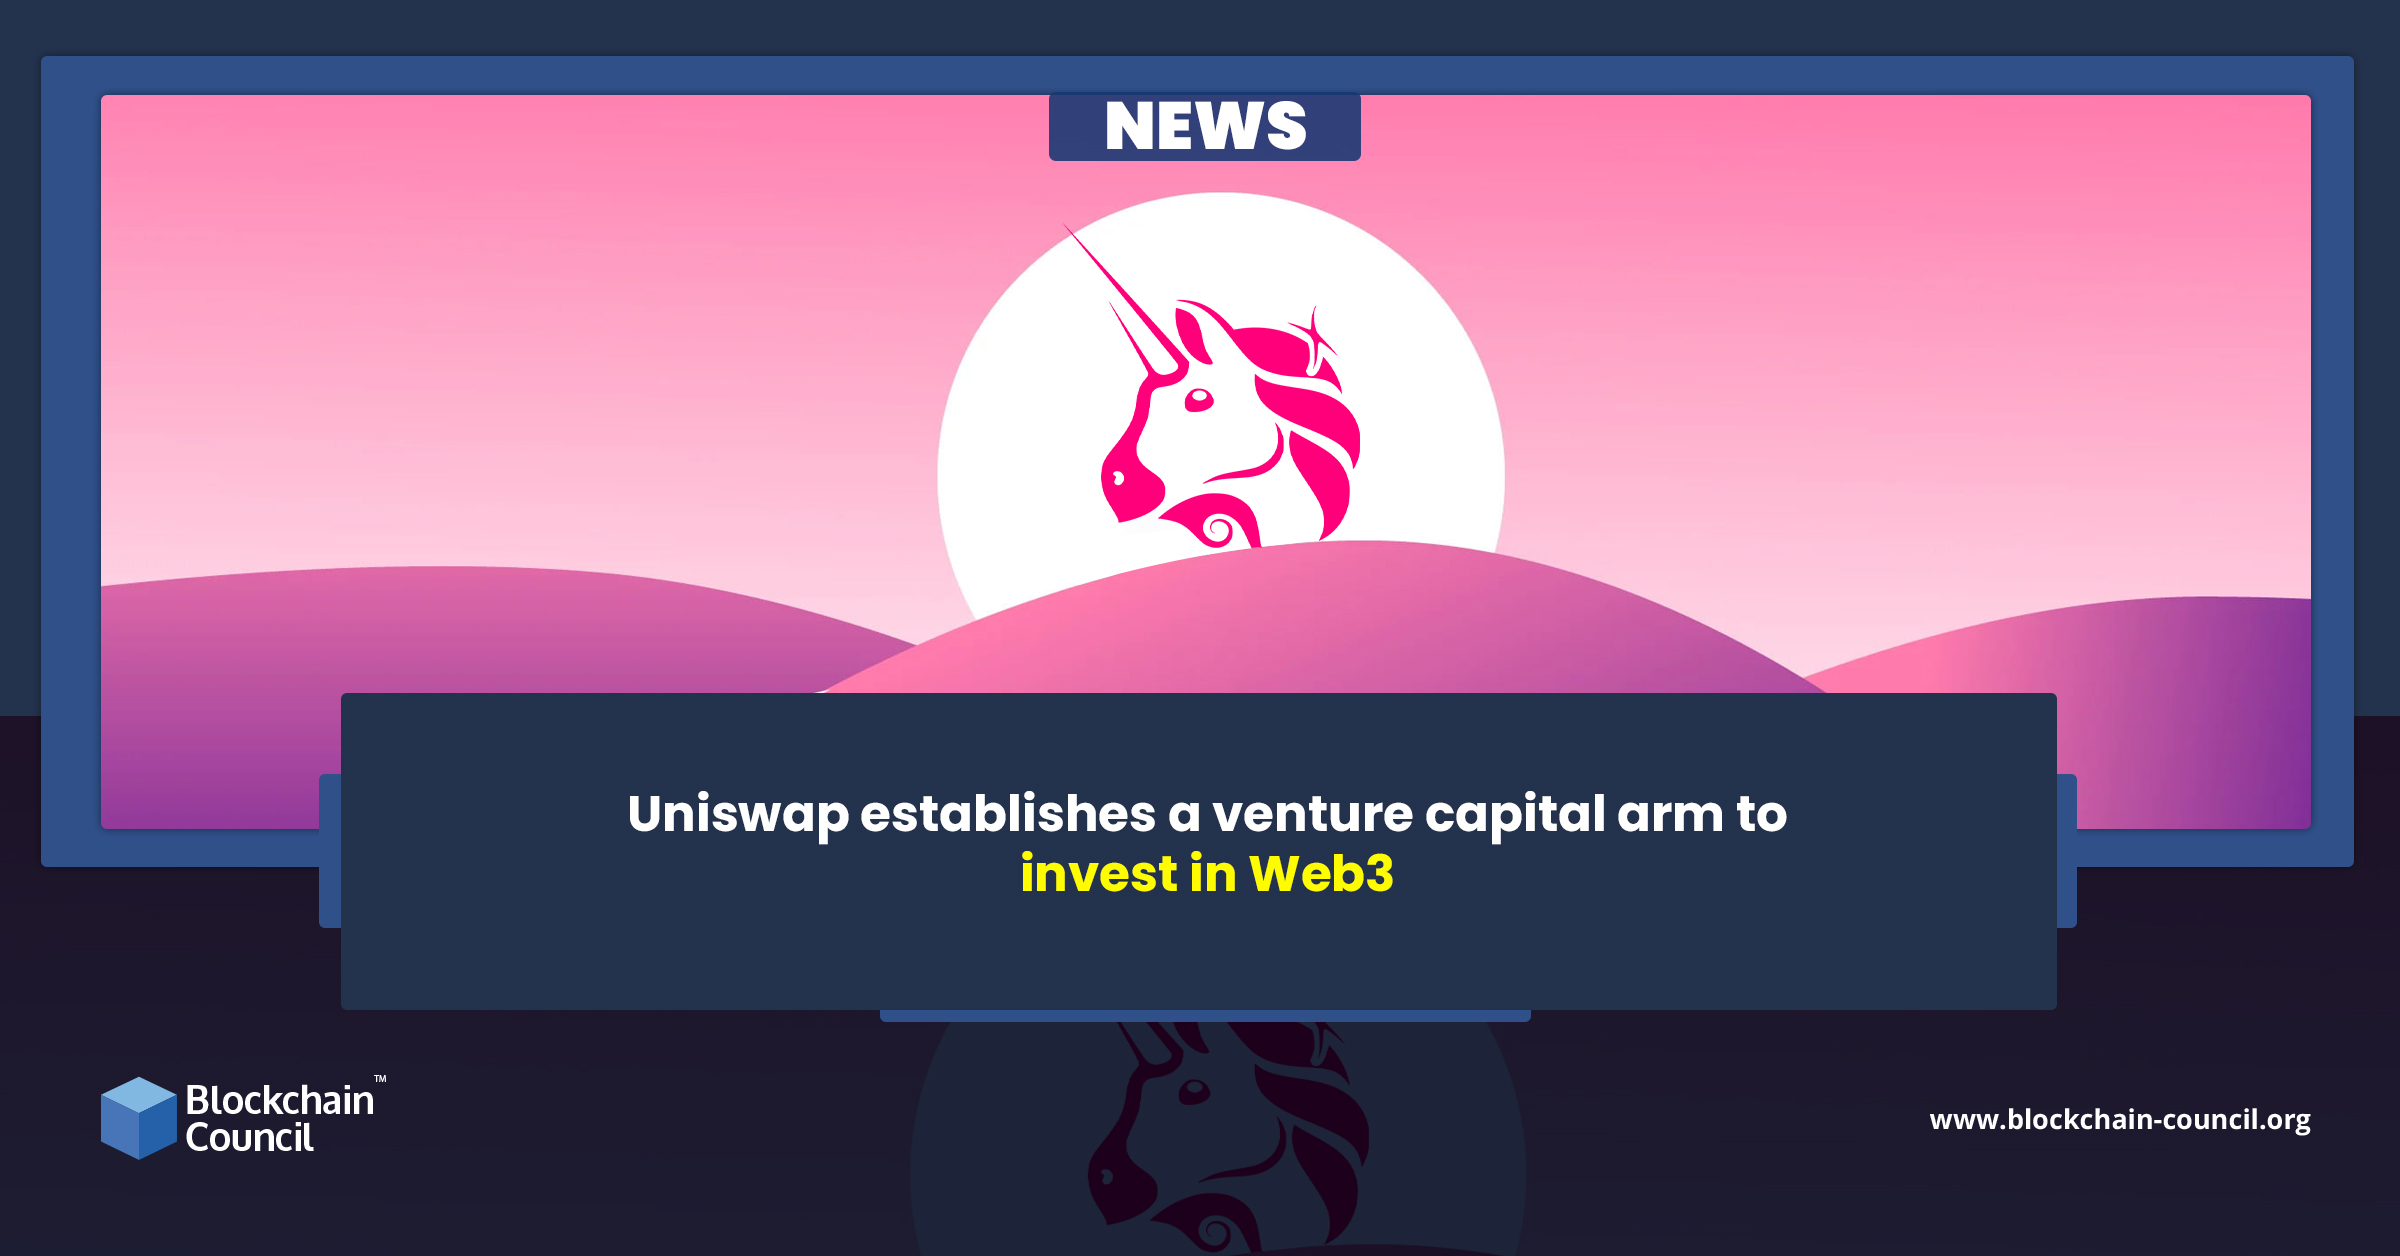 Uniswap establishes a venture capital arm to invest in Web3